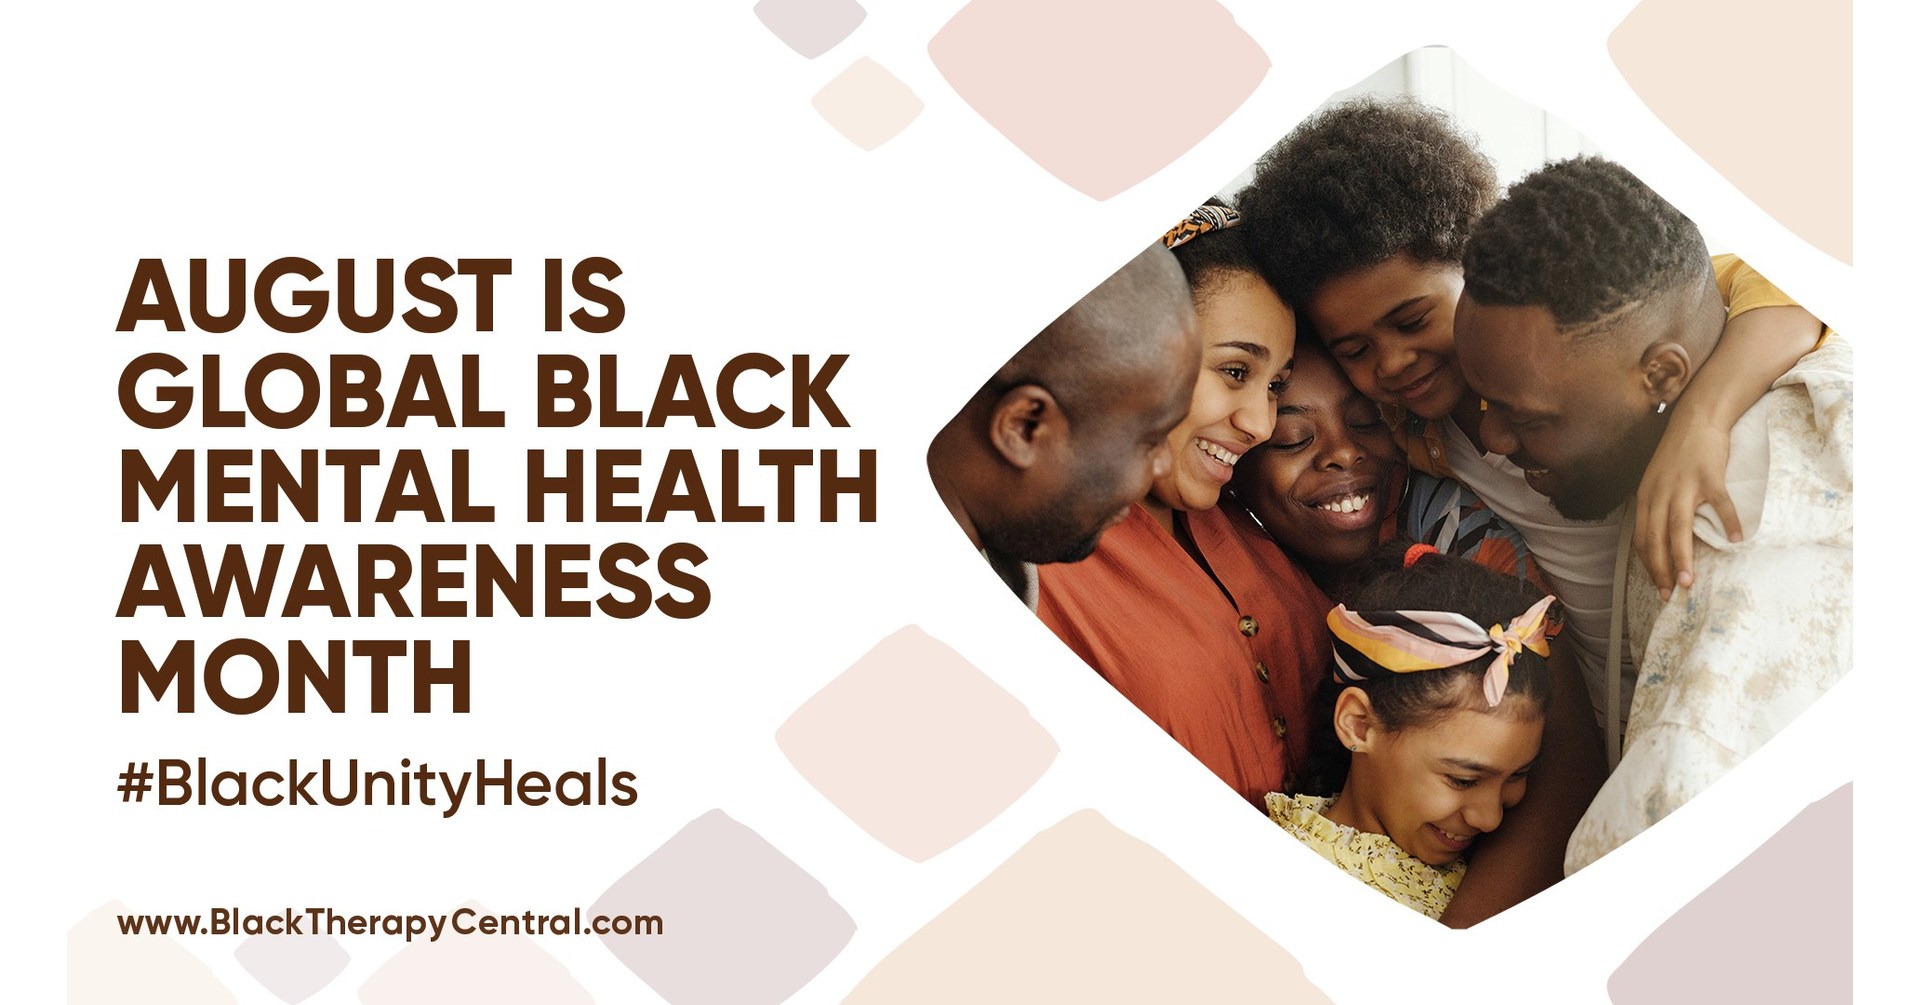 August Declared Global Black Mental Health Awareness Month by Black